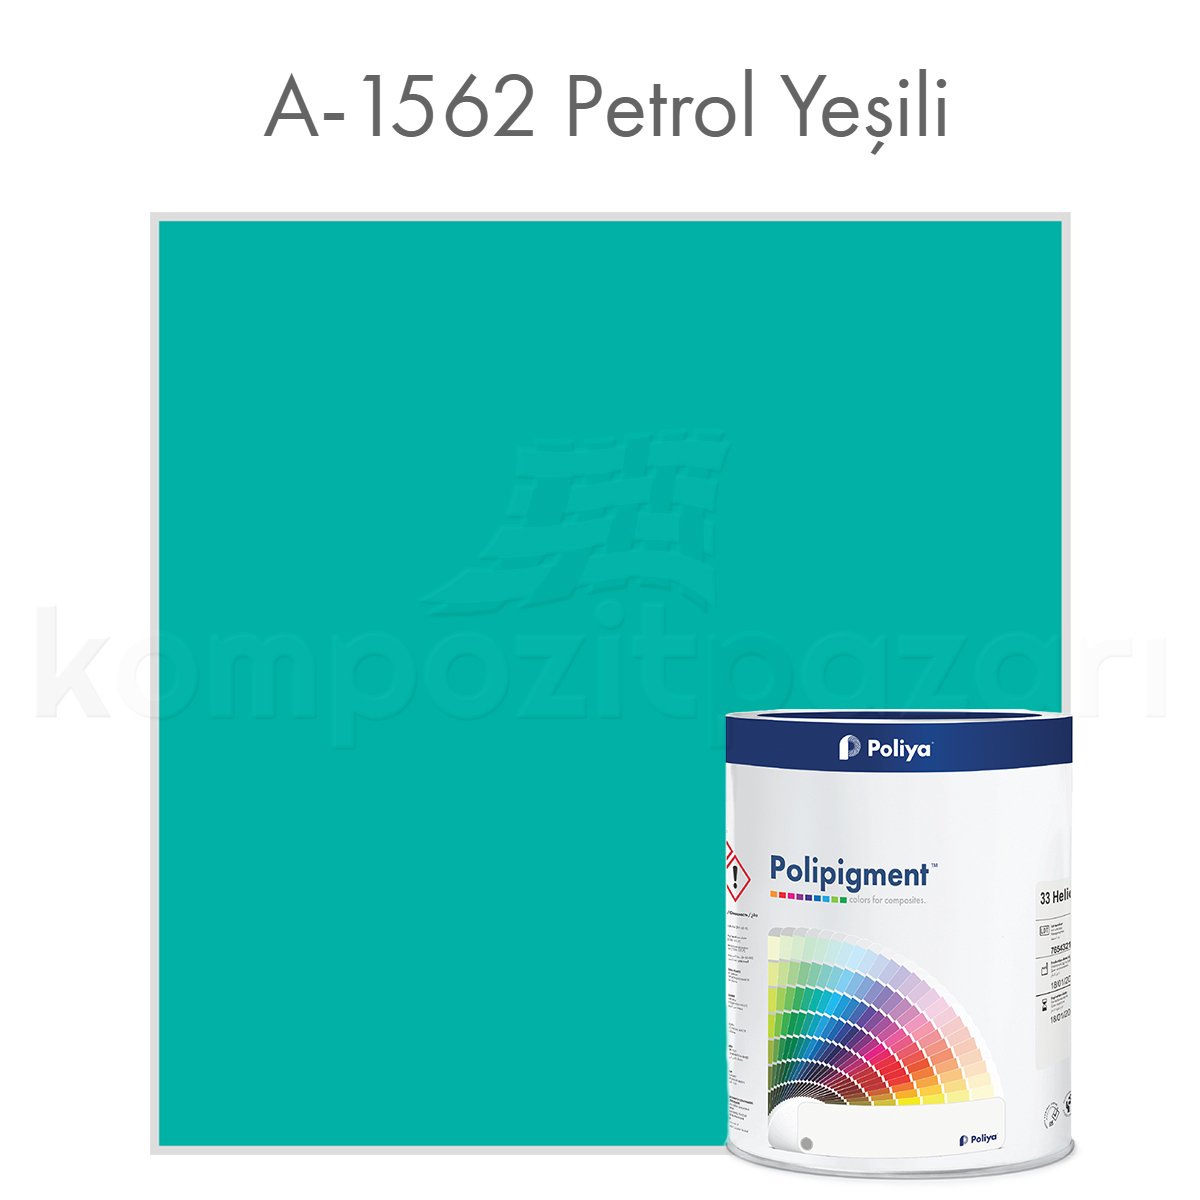 PRO Renk Pigment Pasta Polipigment A-1562 Petrol Yeşili - Net 1 kg - KDV Dahil